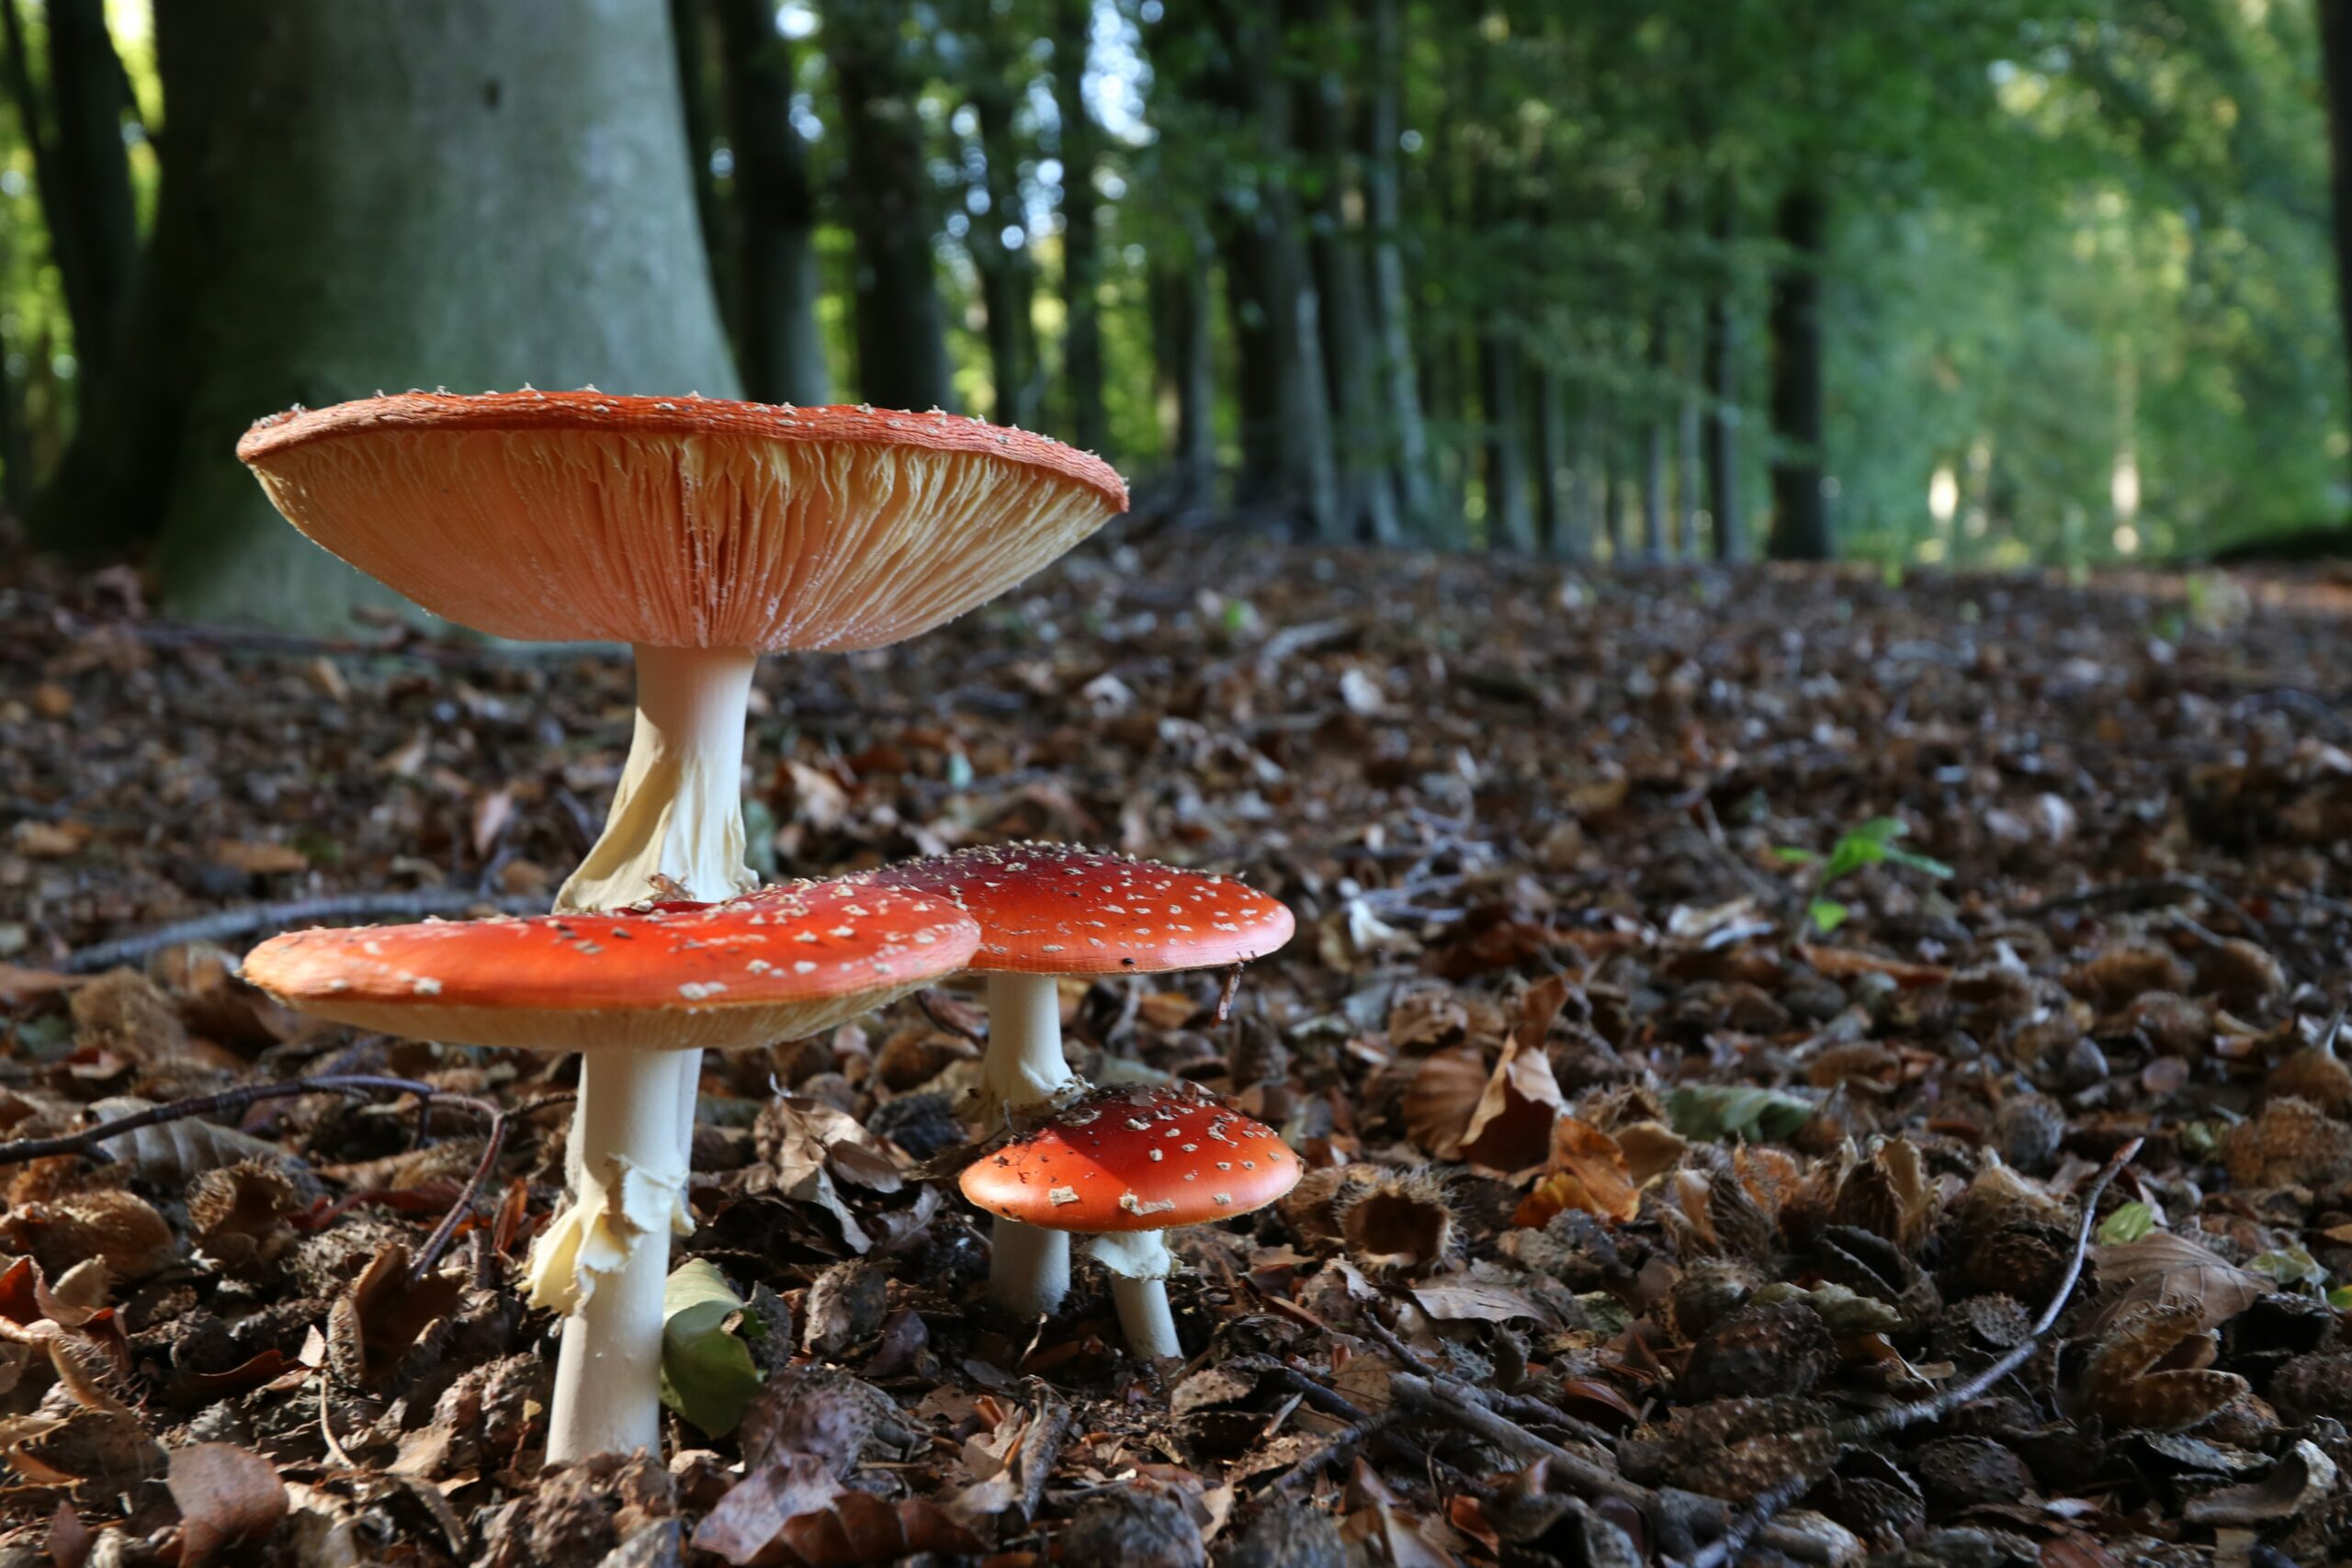 Fantastic Fungi, Mushrooms, Documentary